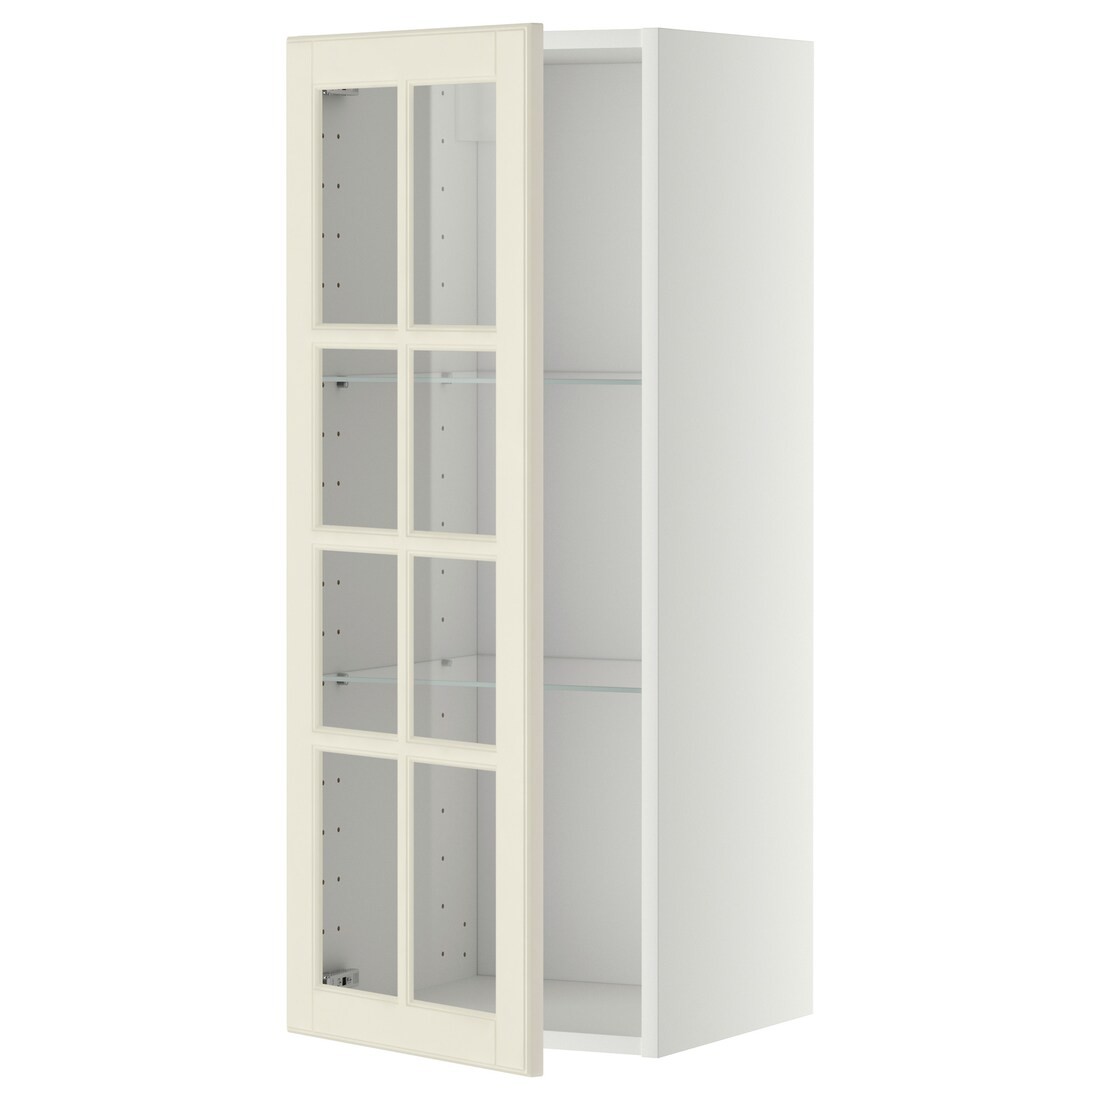 IKEA METOD МЕТОД Навесной шкаф, белый / Bodbyn кремовый, 40x100 см 49394977 493.949.77